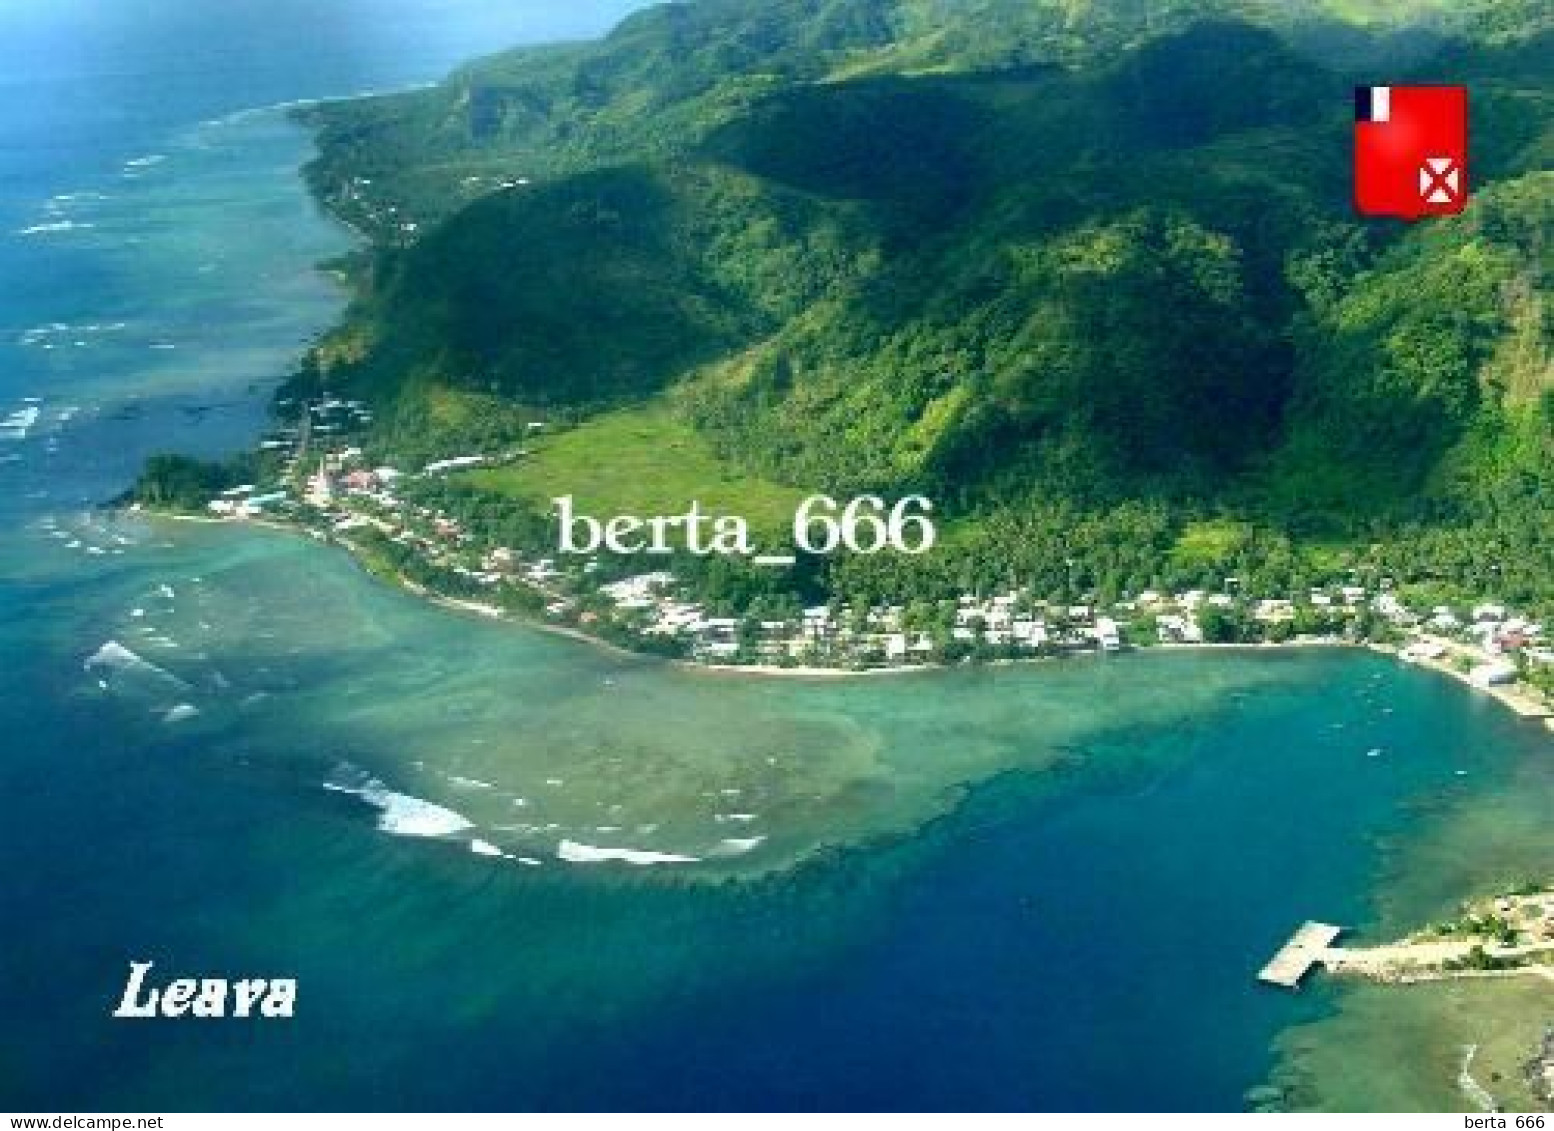 Wallis And Futuna Leava Aerial View New Postcard - Wallis E Futuna